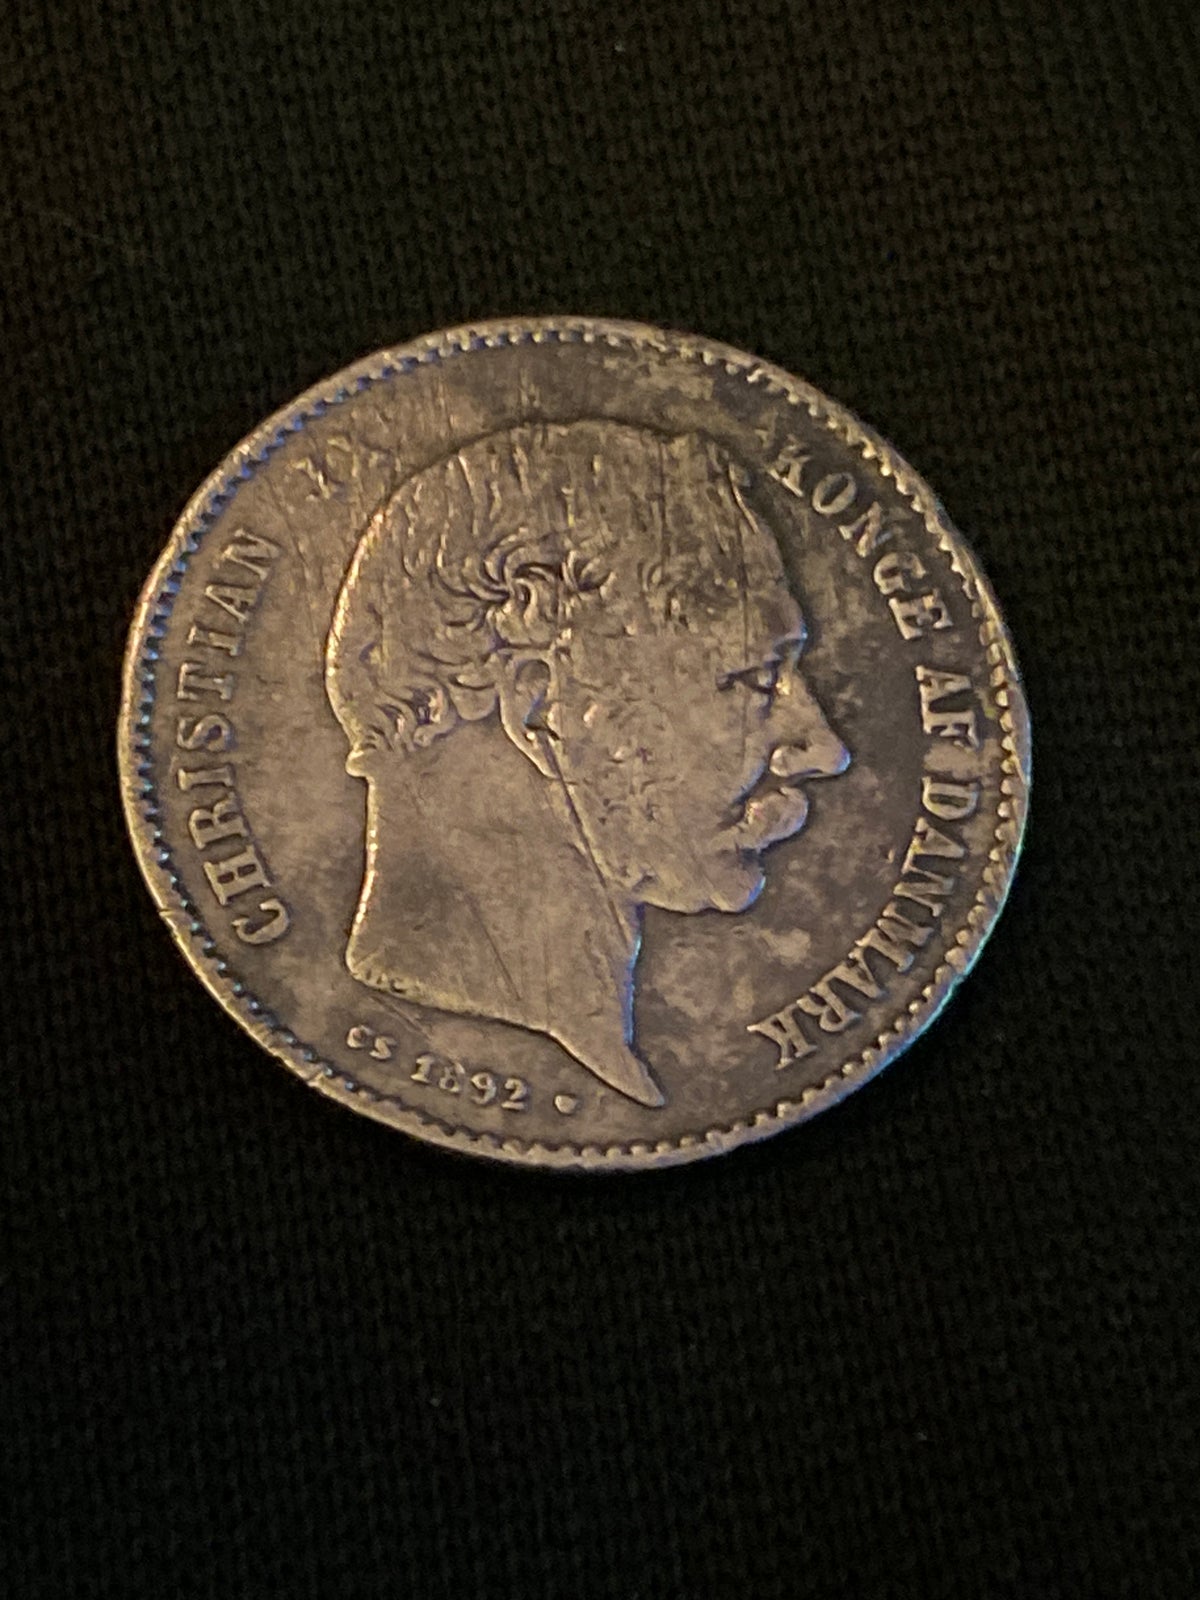 Danmark, mønter, 1 krone